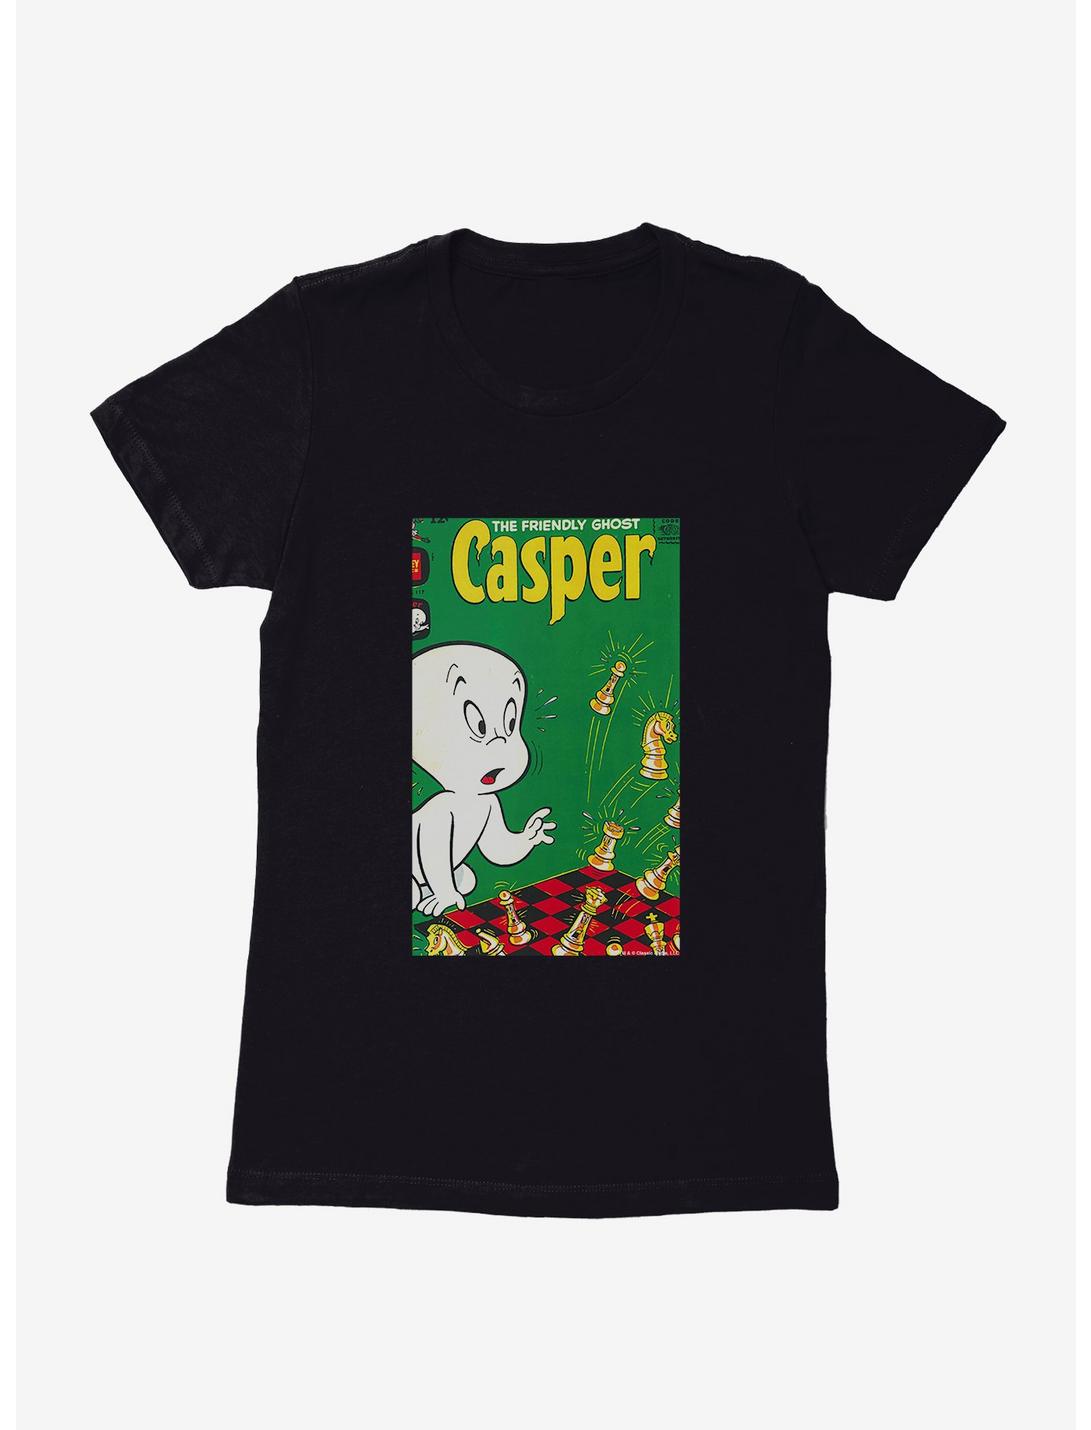 Casper The Friendly Ghost Chess Comic Cover Womens T-Shirt, BLACK, hi-res